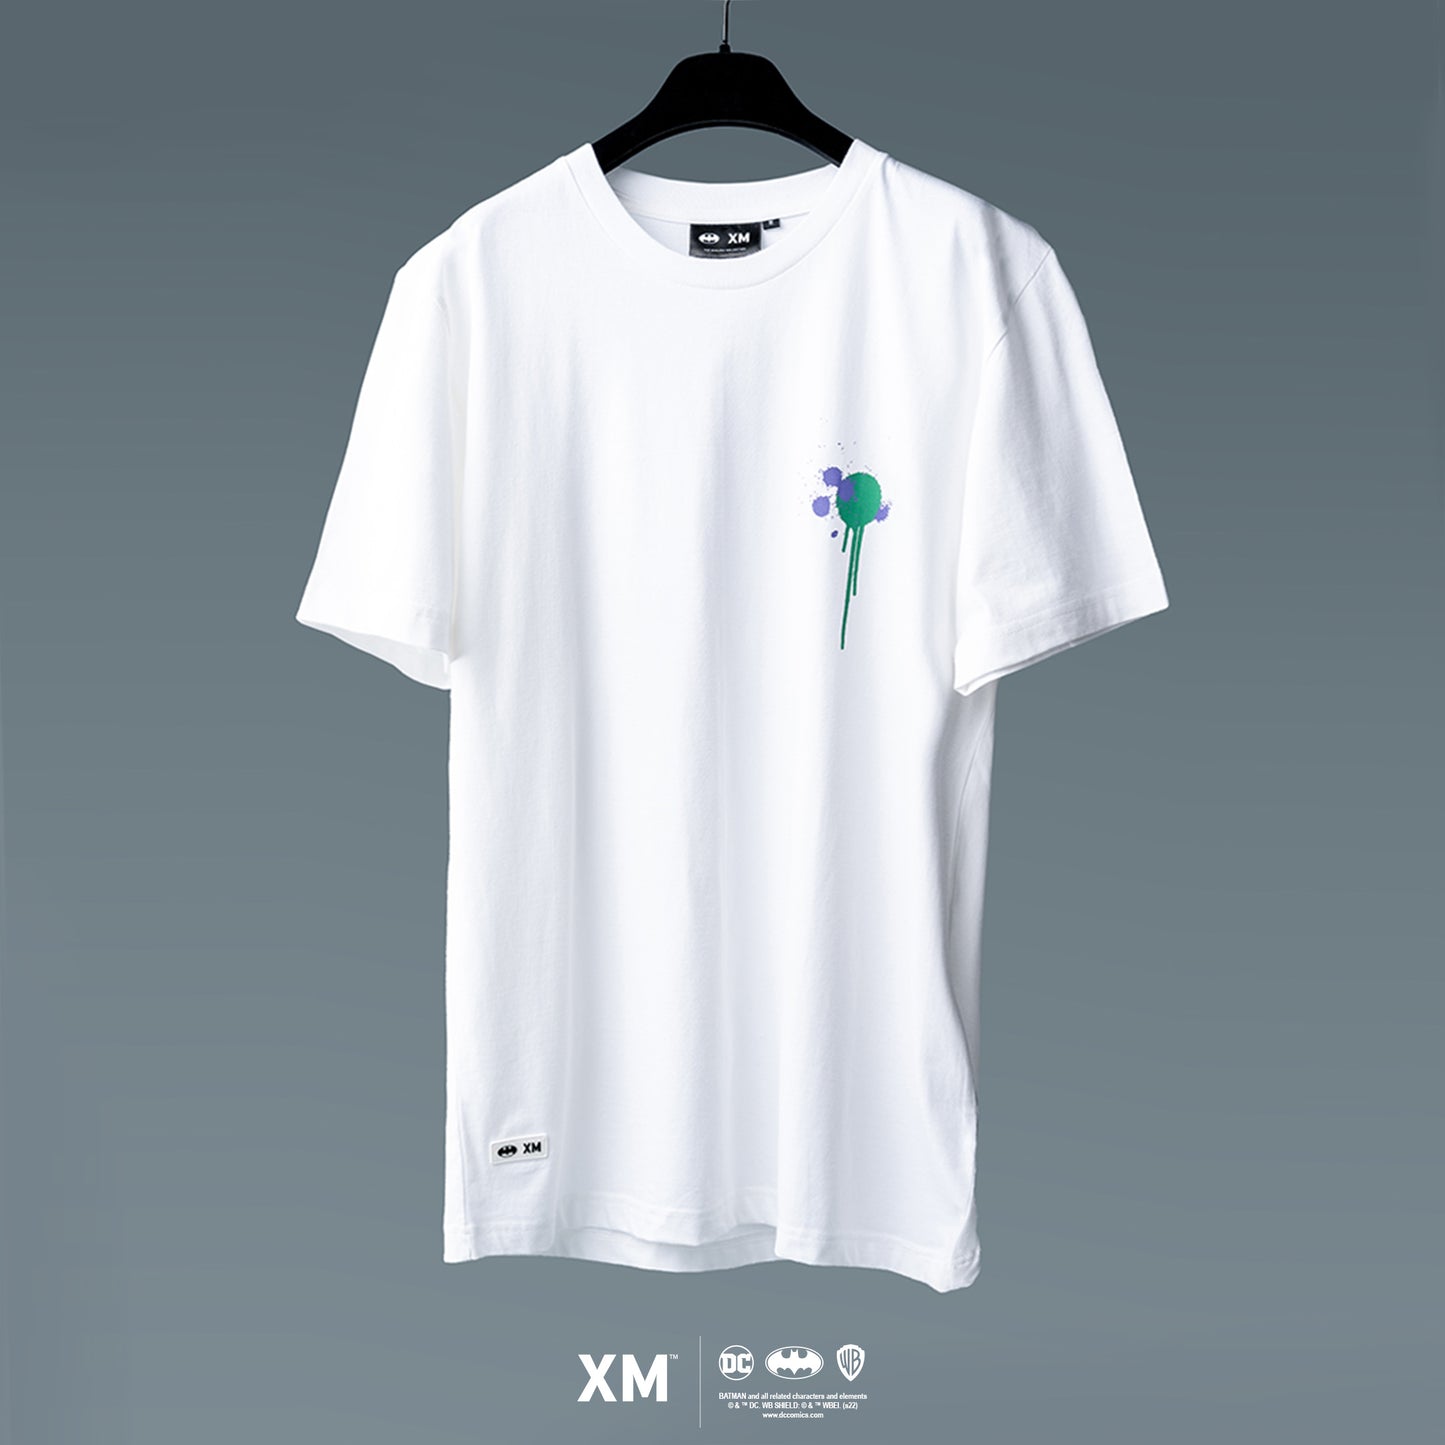 Batman Samurai Collection - Joker Orochi-Inspired Logo (White) T shirt